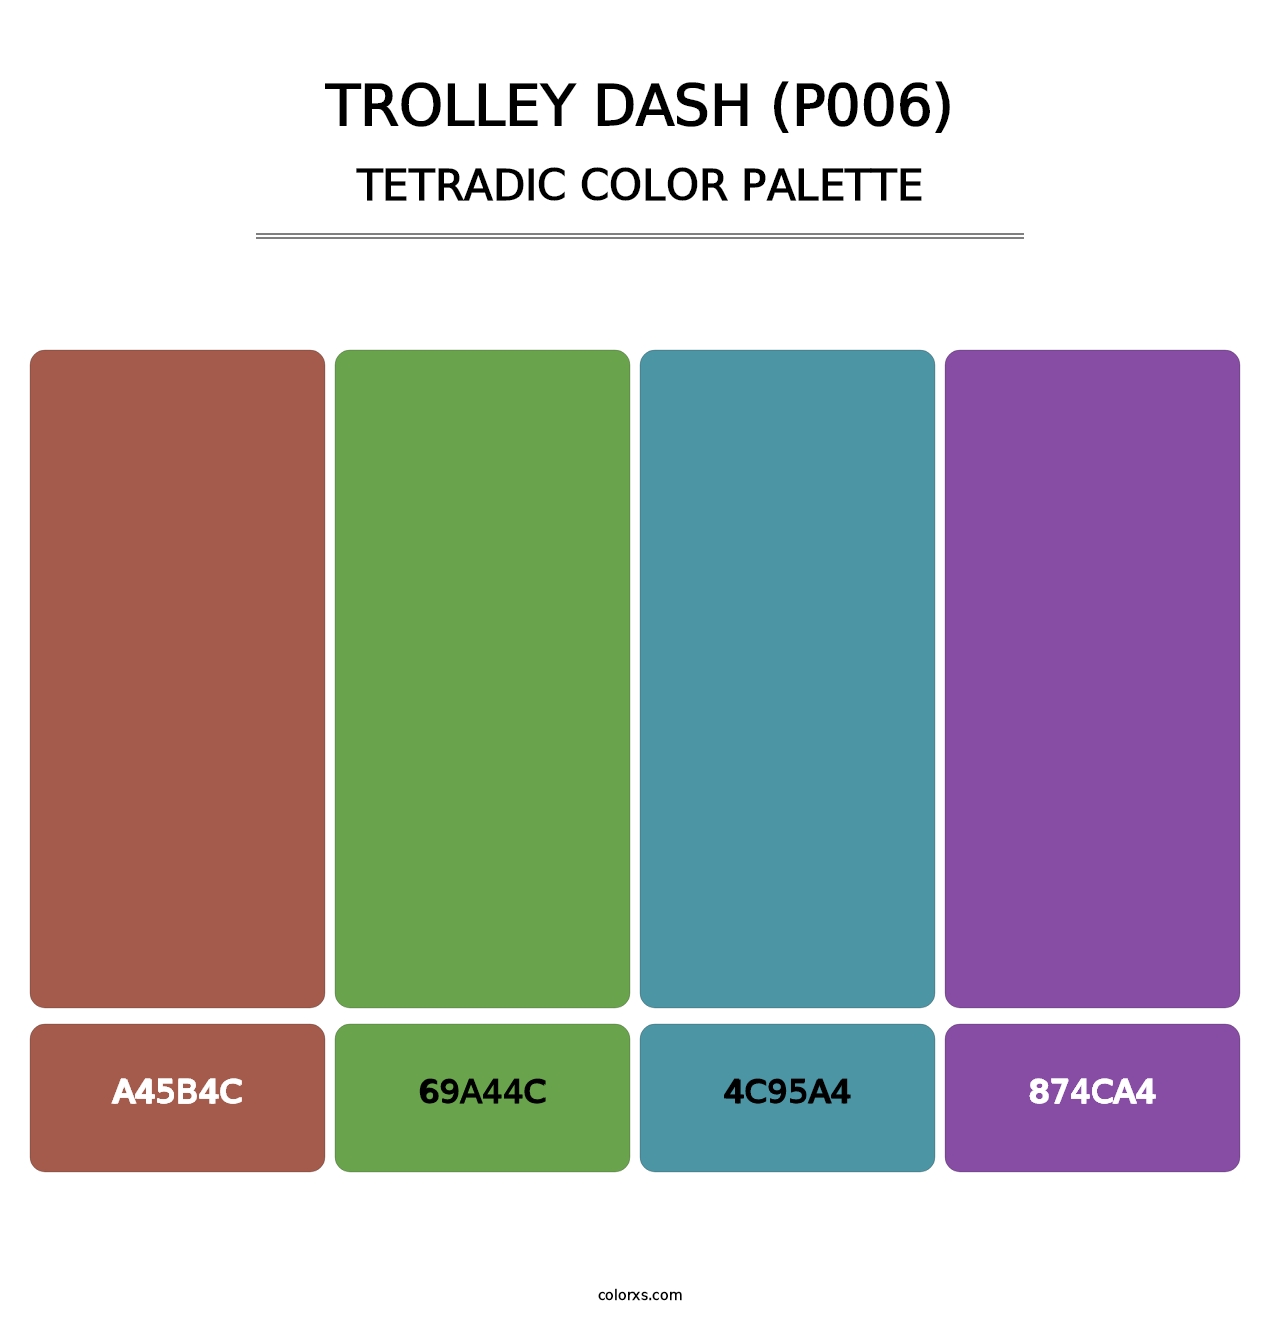 Trolley Dash (P006) - Tetradic Color Palette